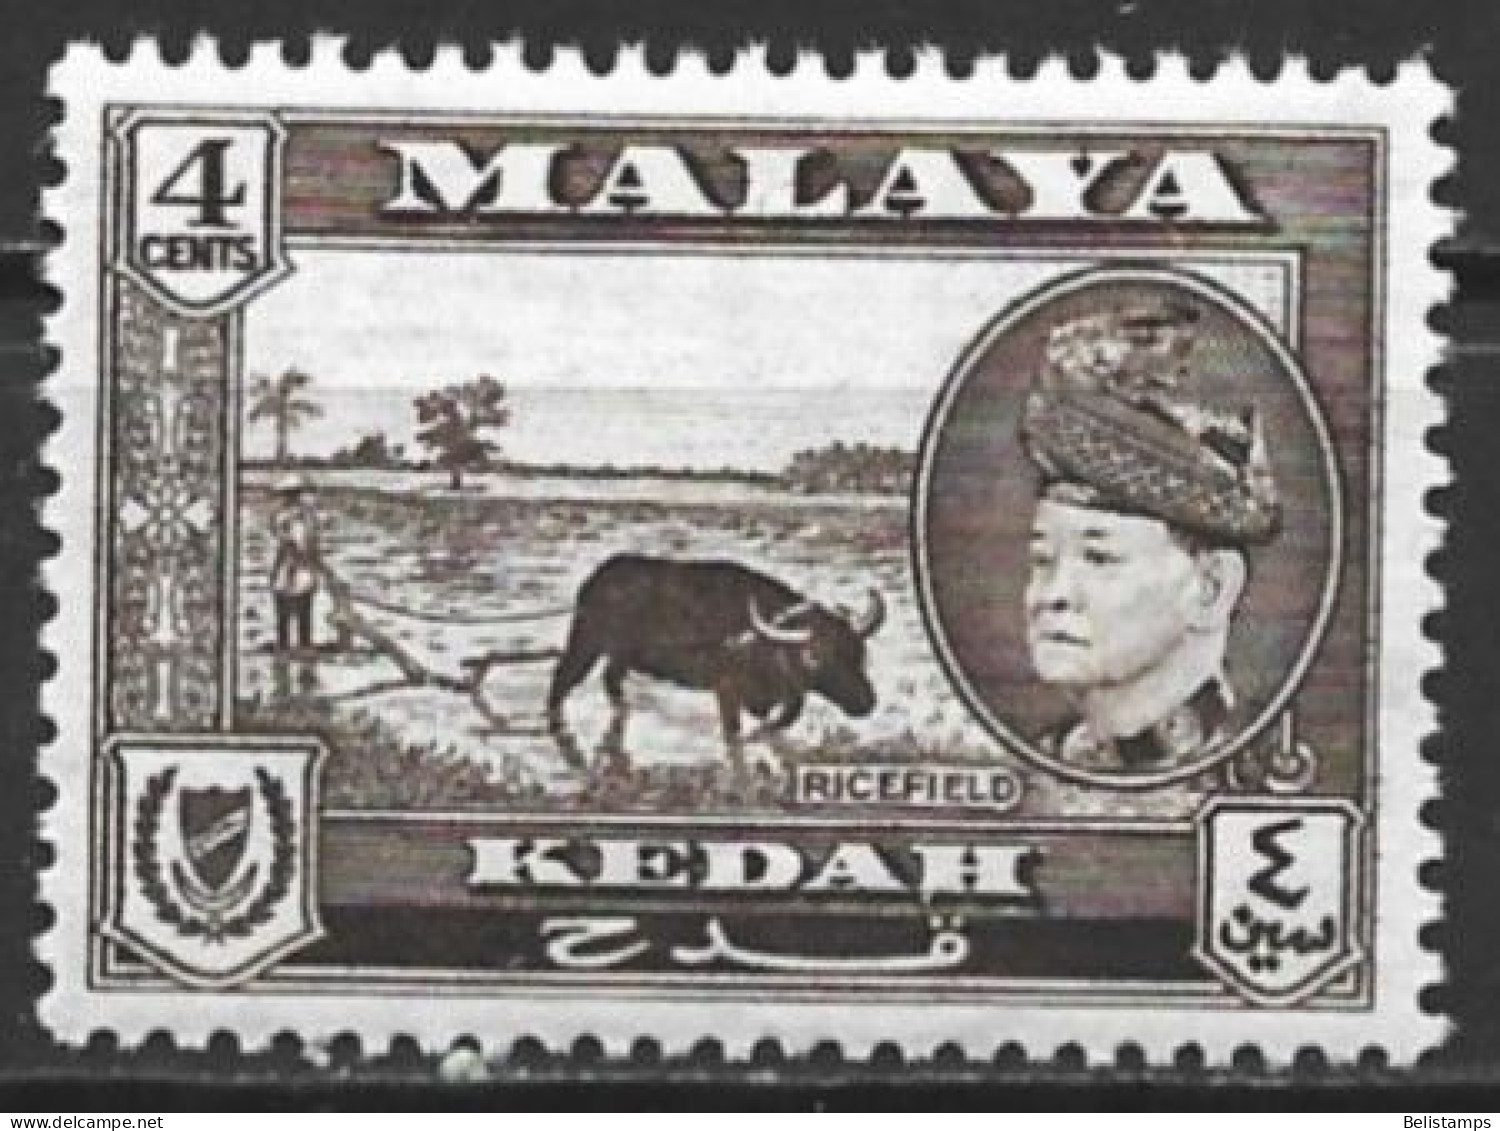 Malaya - Kedah 1957. Scott #85 (MH) Sultan Tungku Badlishah And Rice Field - Kedah